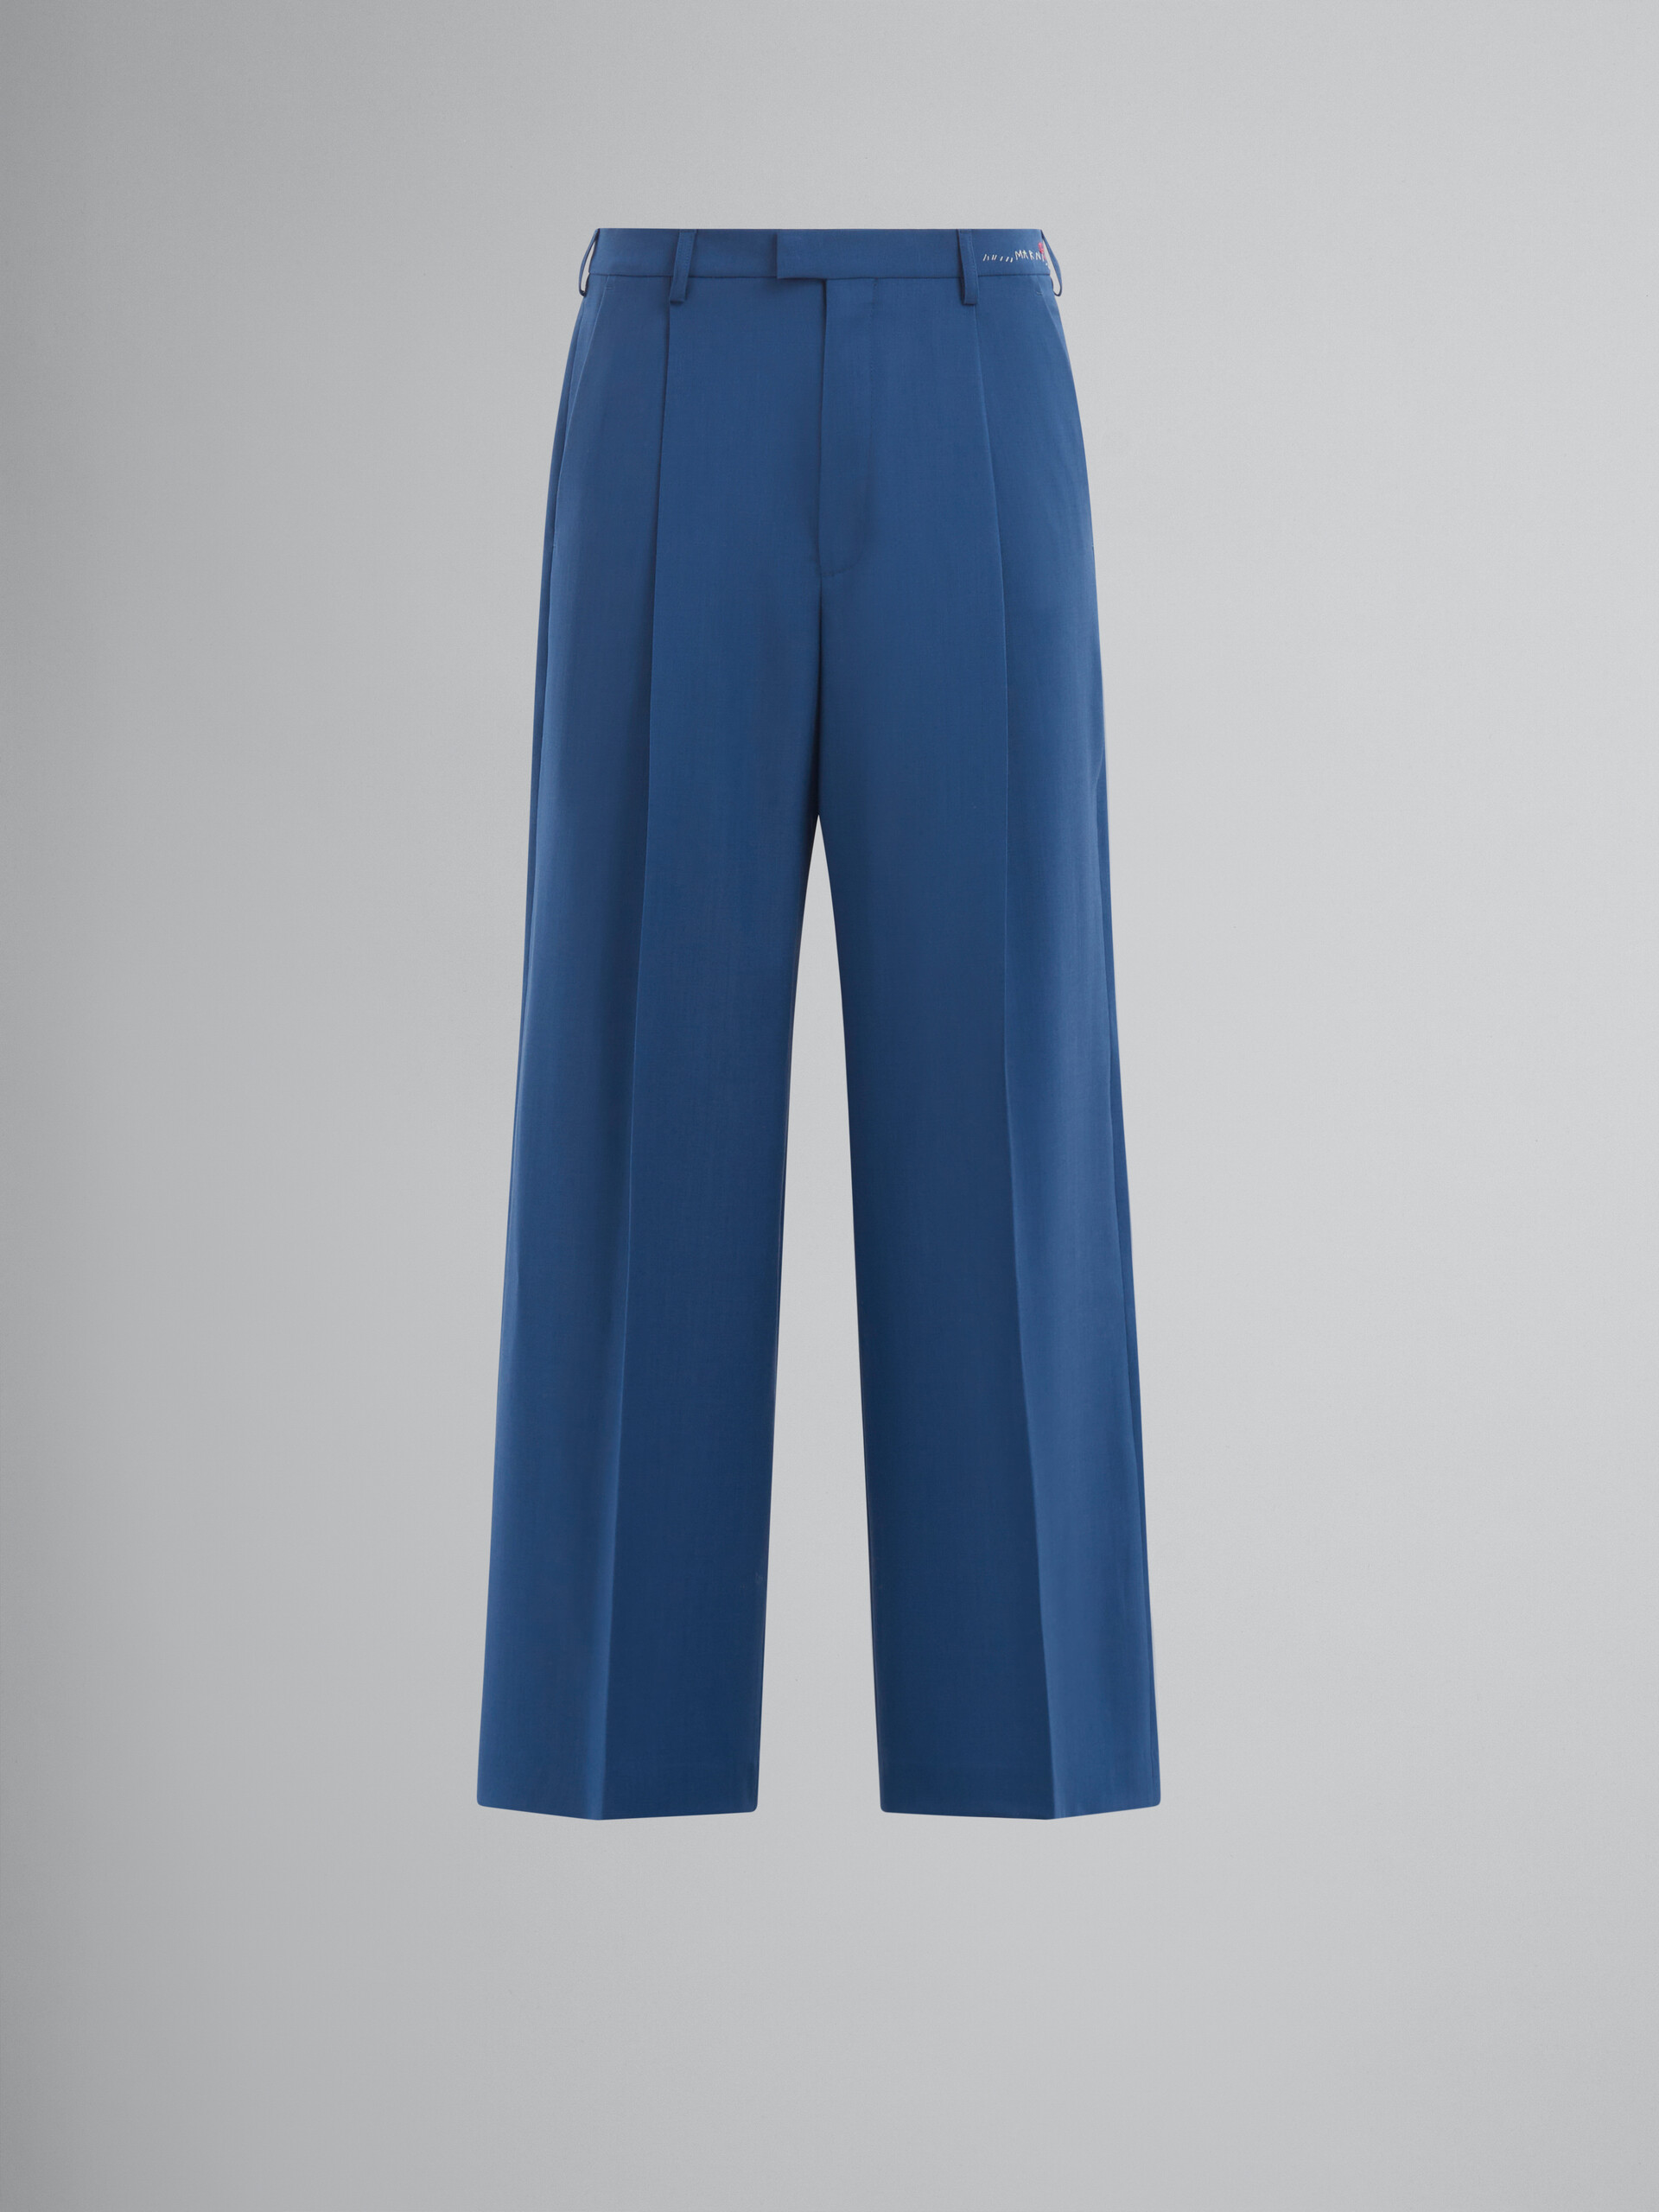 Pantaloni in lana mohair blu con pieghe - Pantaloni - Image 1